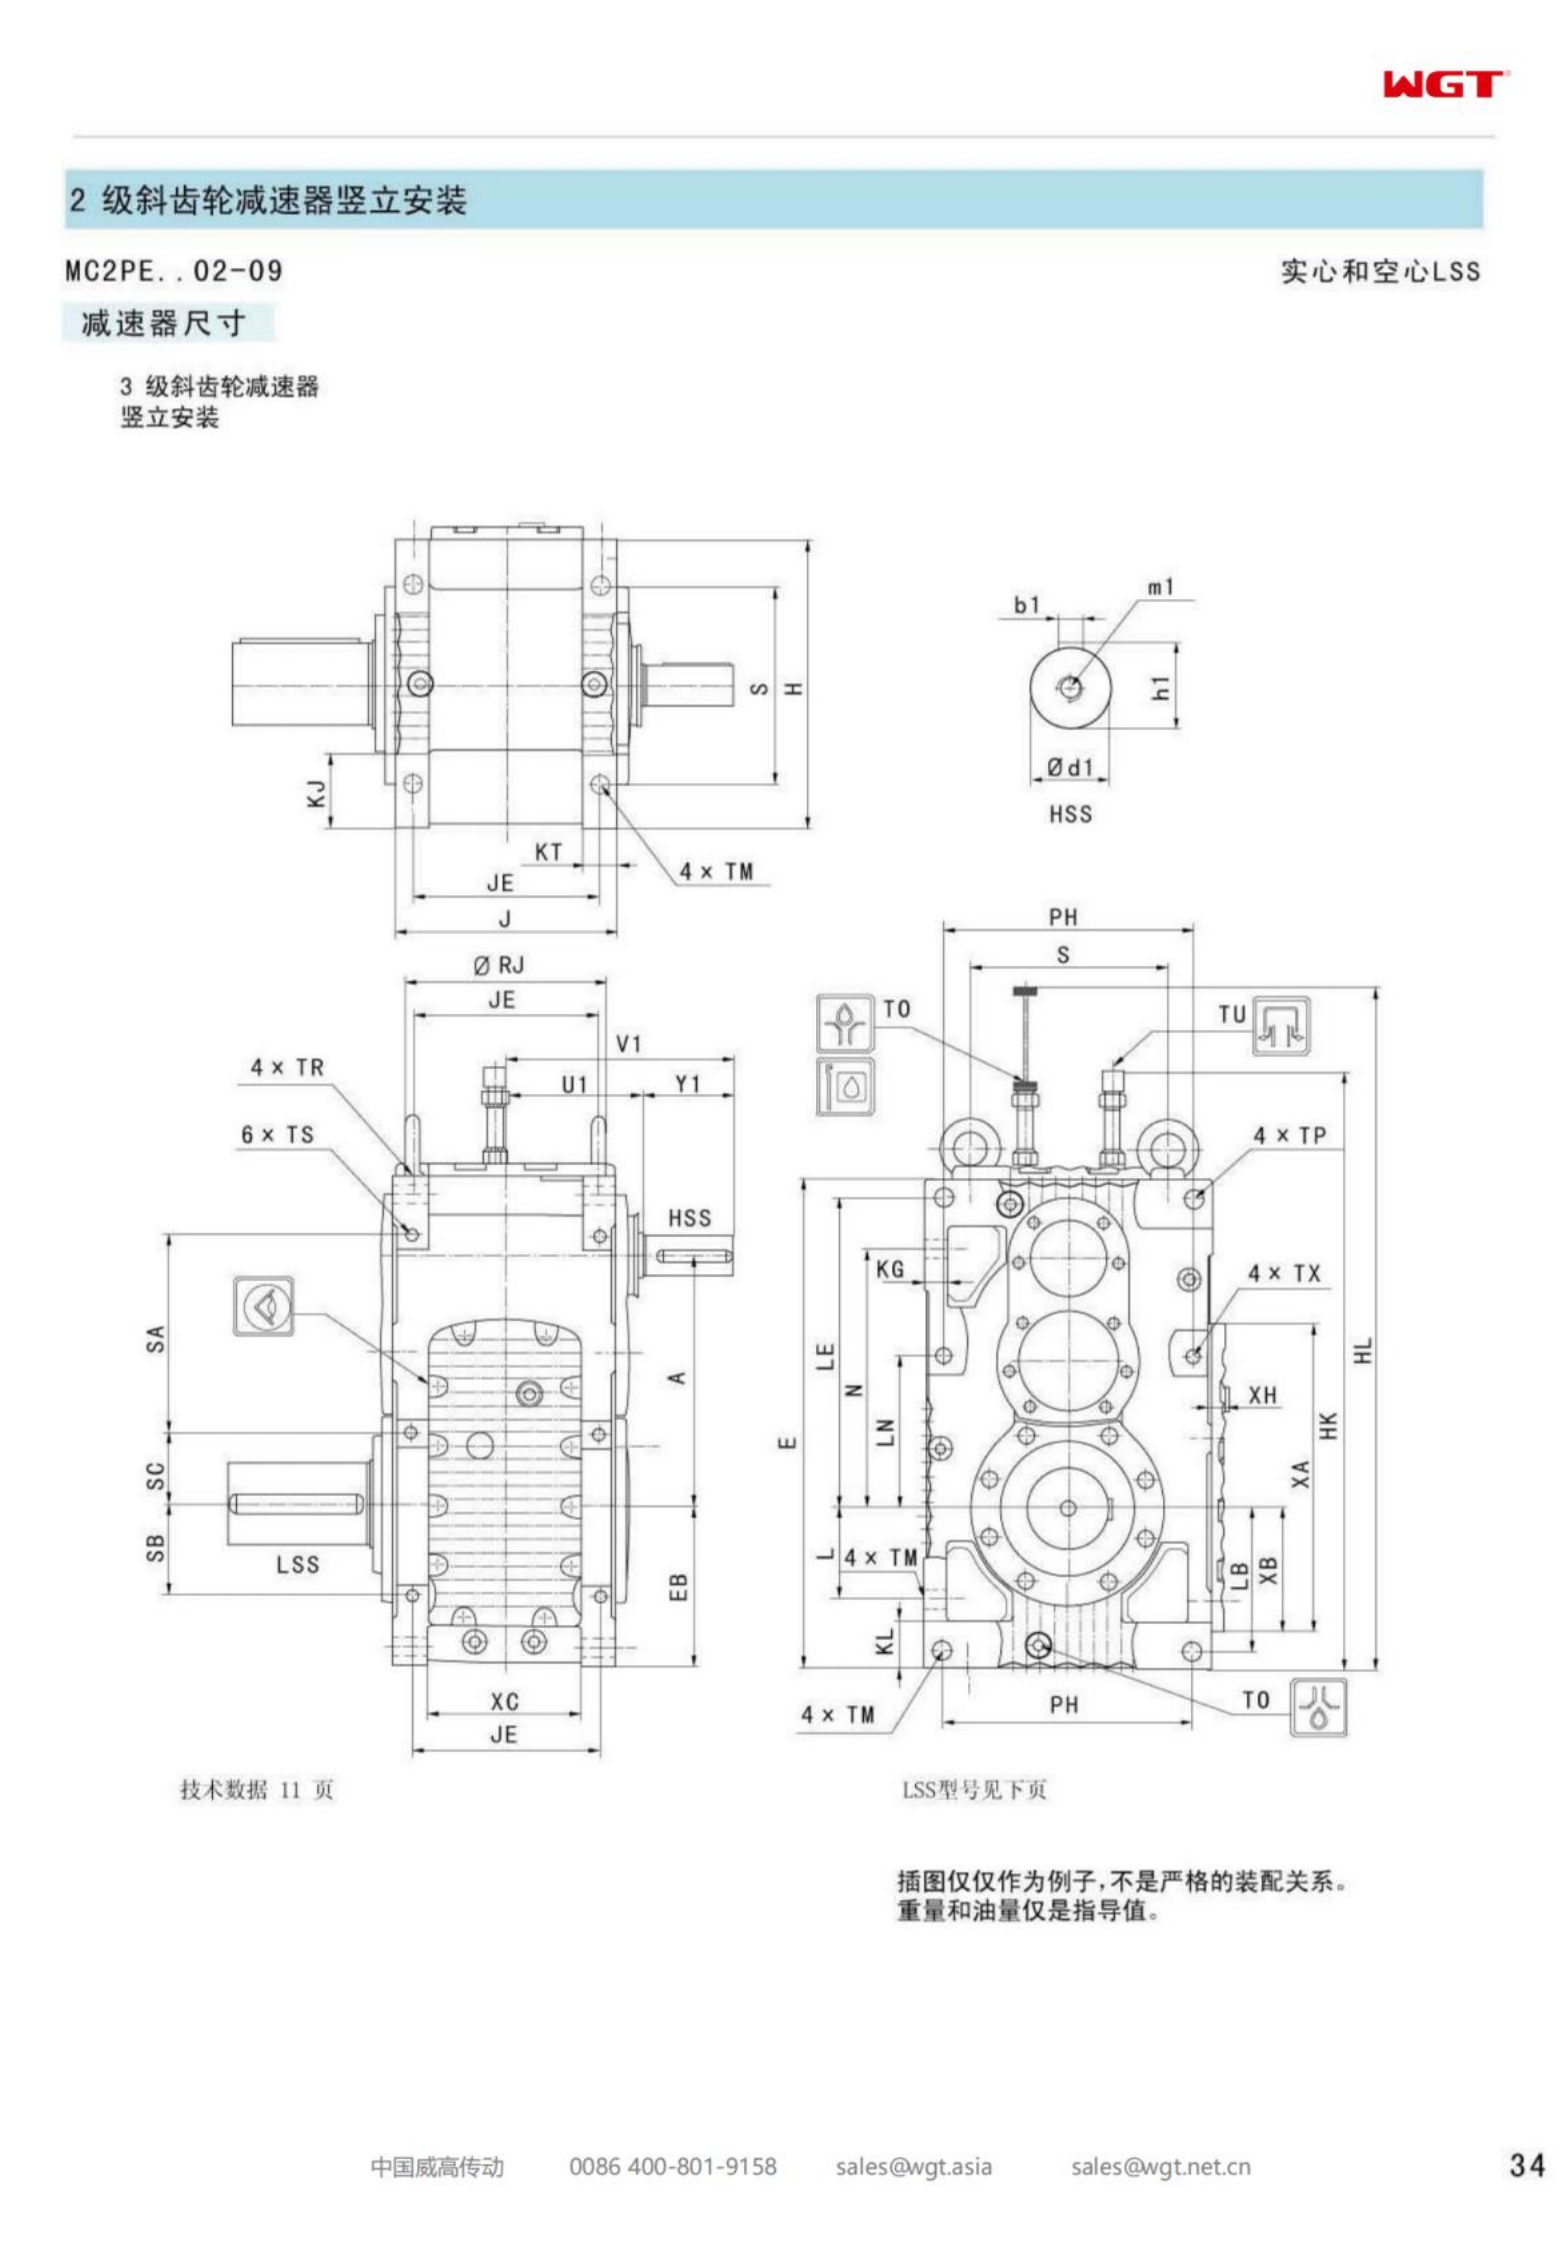 MC2PESF06 replaces _SEW_MC_Series gearbox (patent)